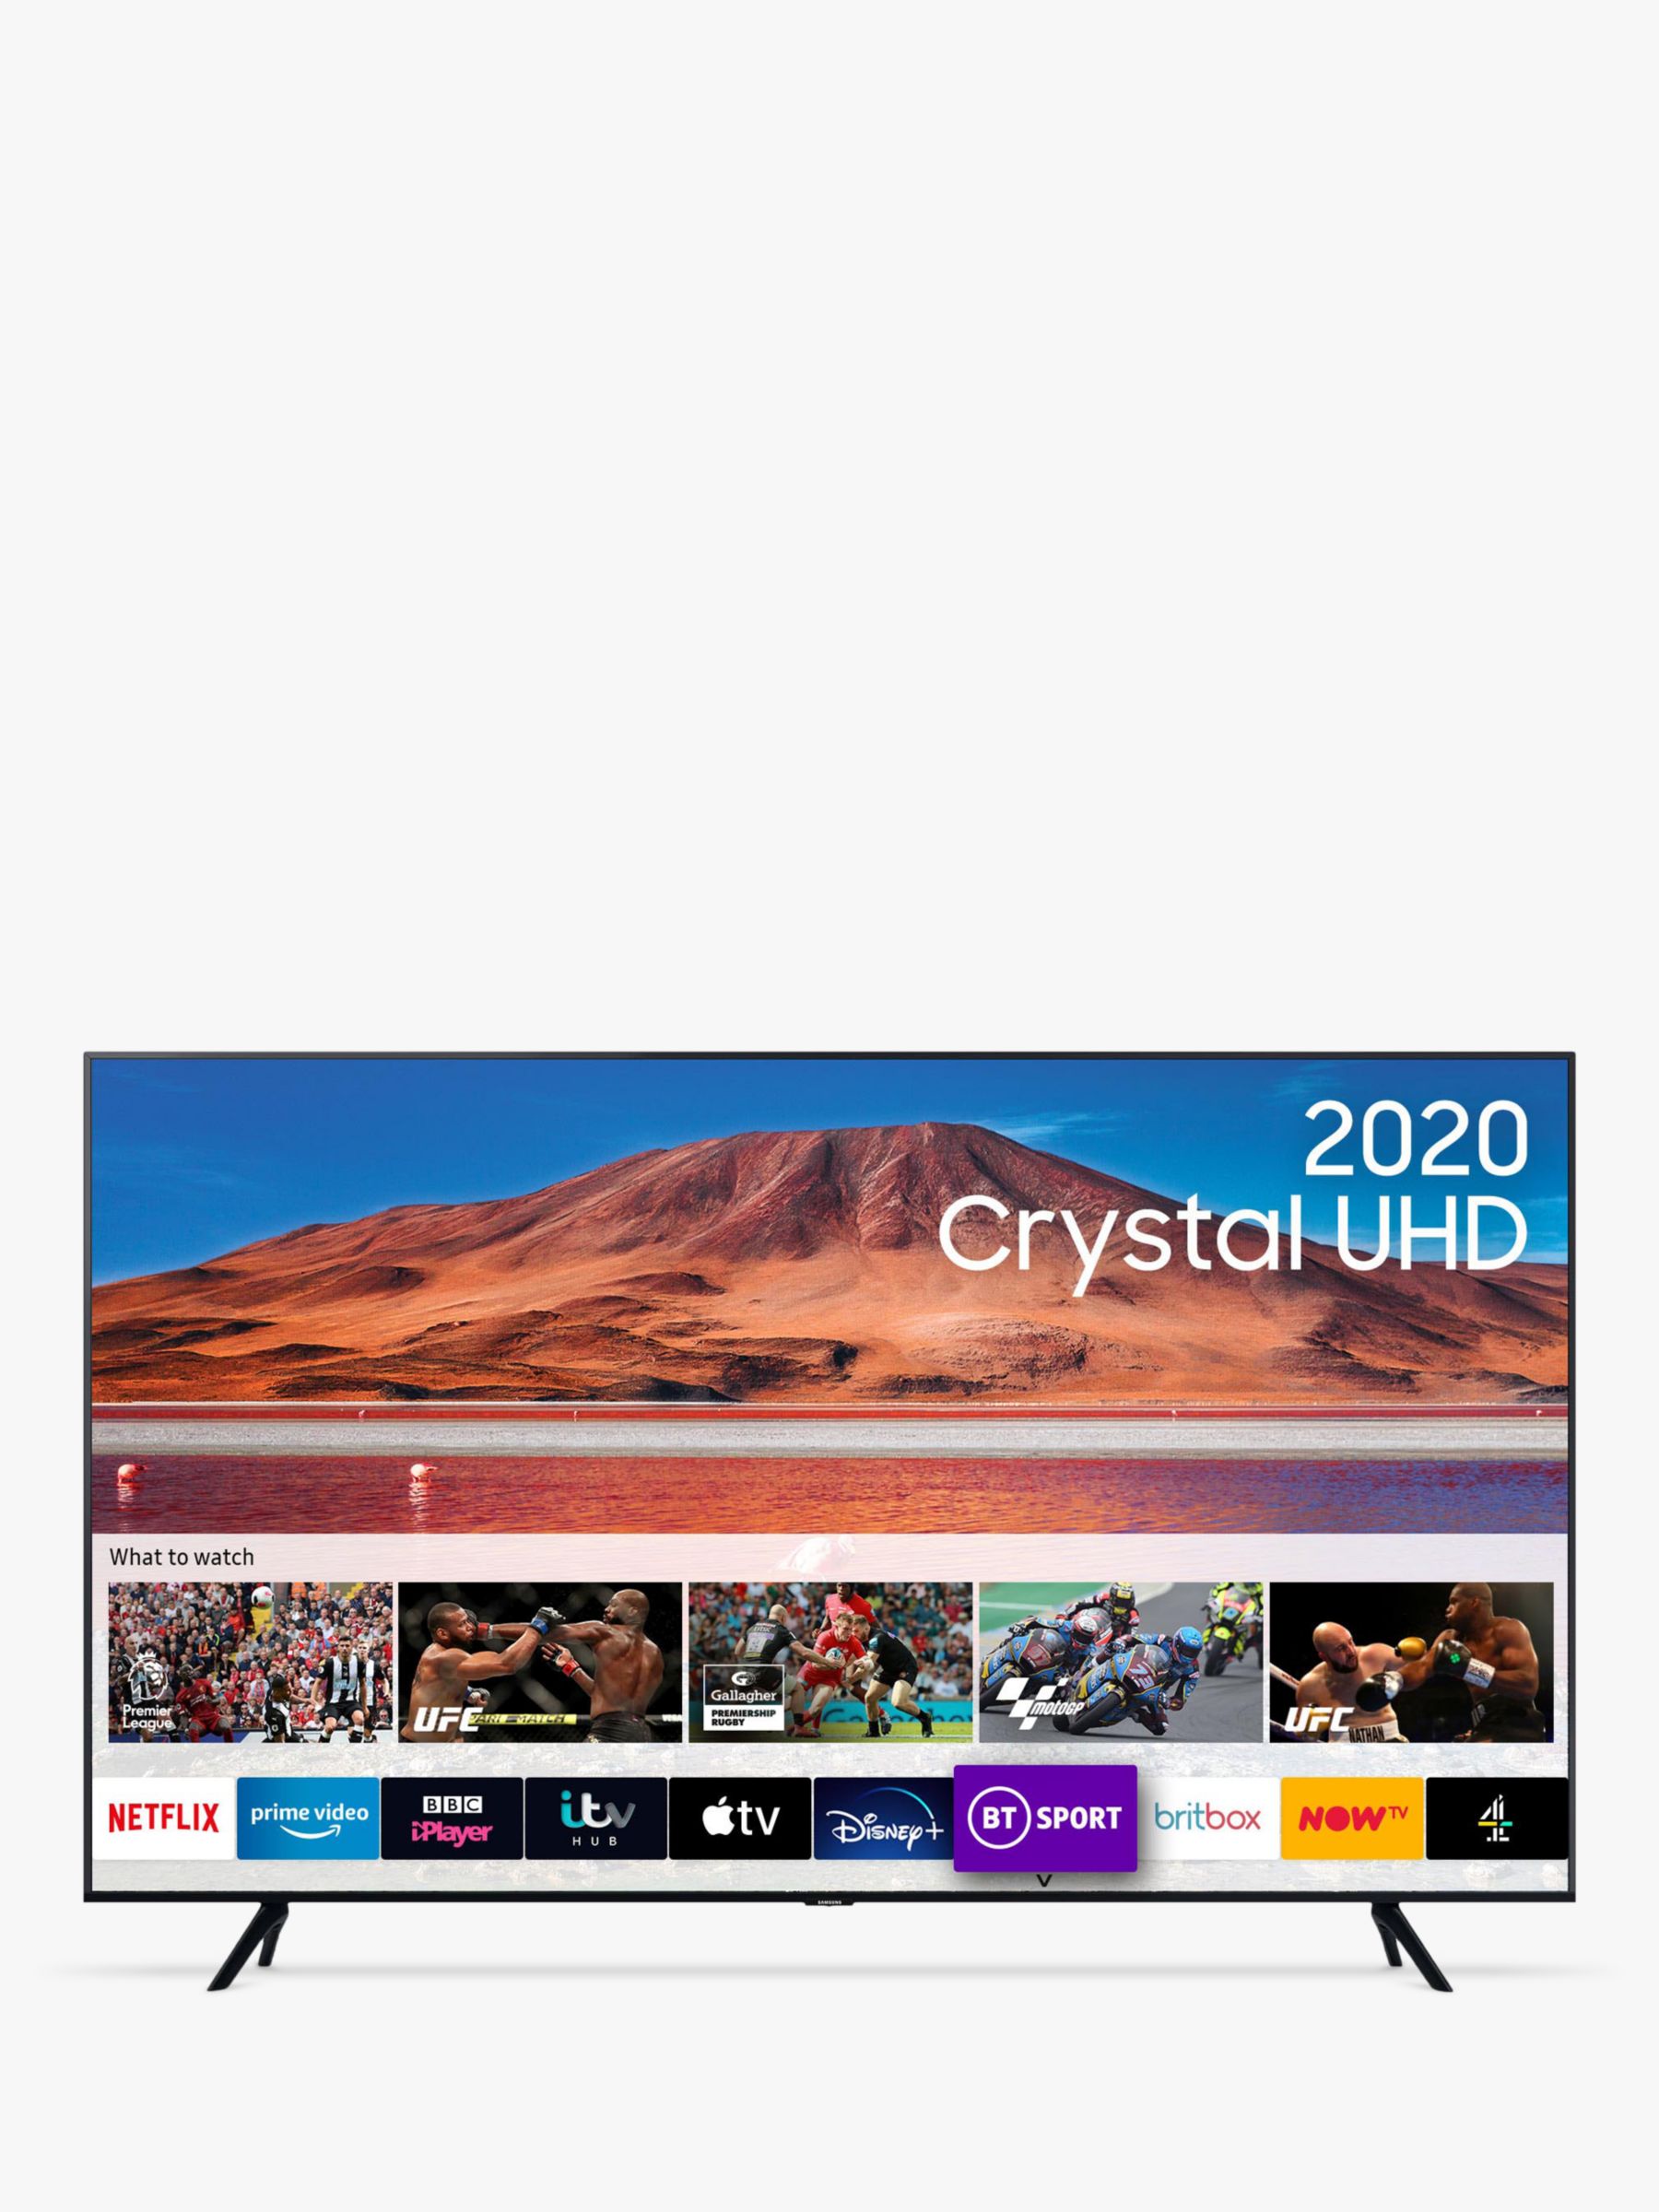 Samsung UE65TU7000 (2020) HDR 4K Ultra HD Smart TV, 65 inch with TVPlus, Black